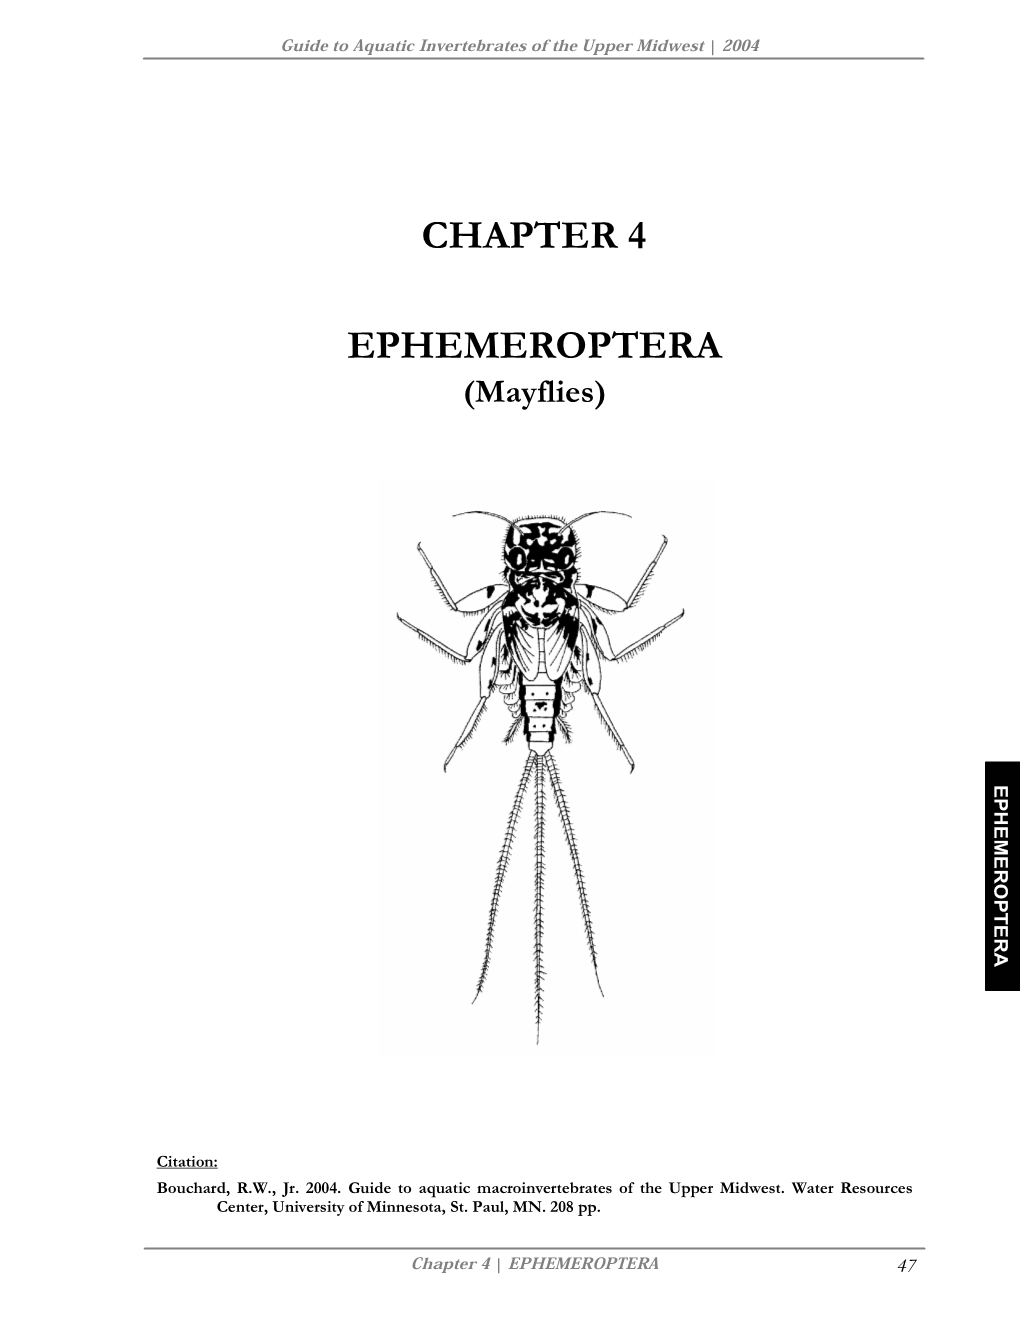 Chapter 4 Ephemeroptera